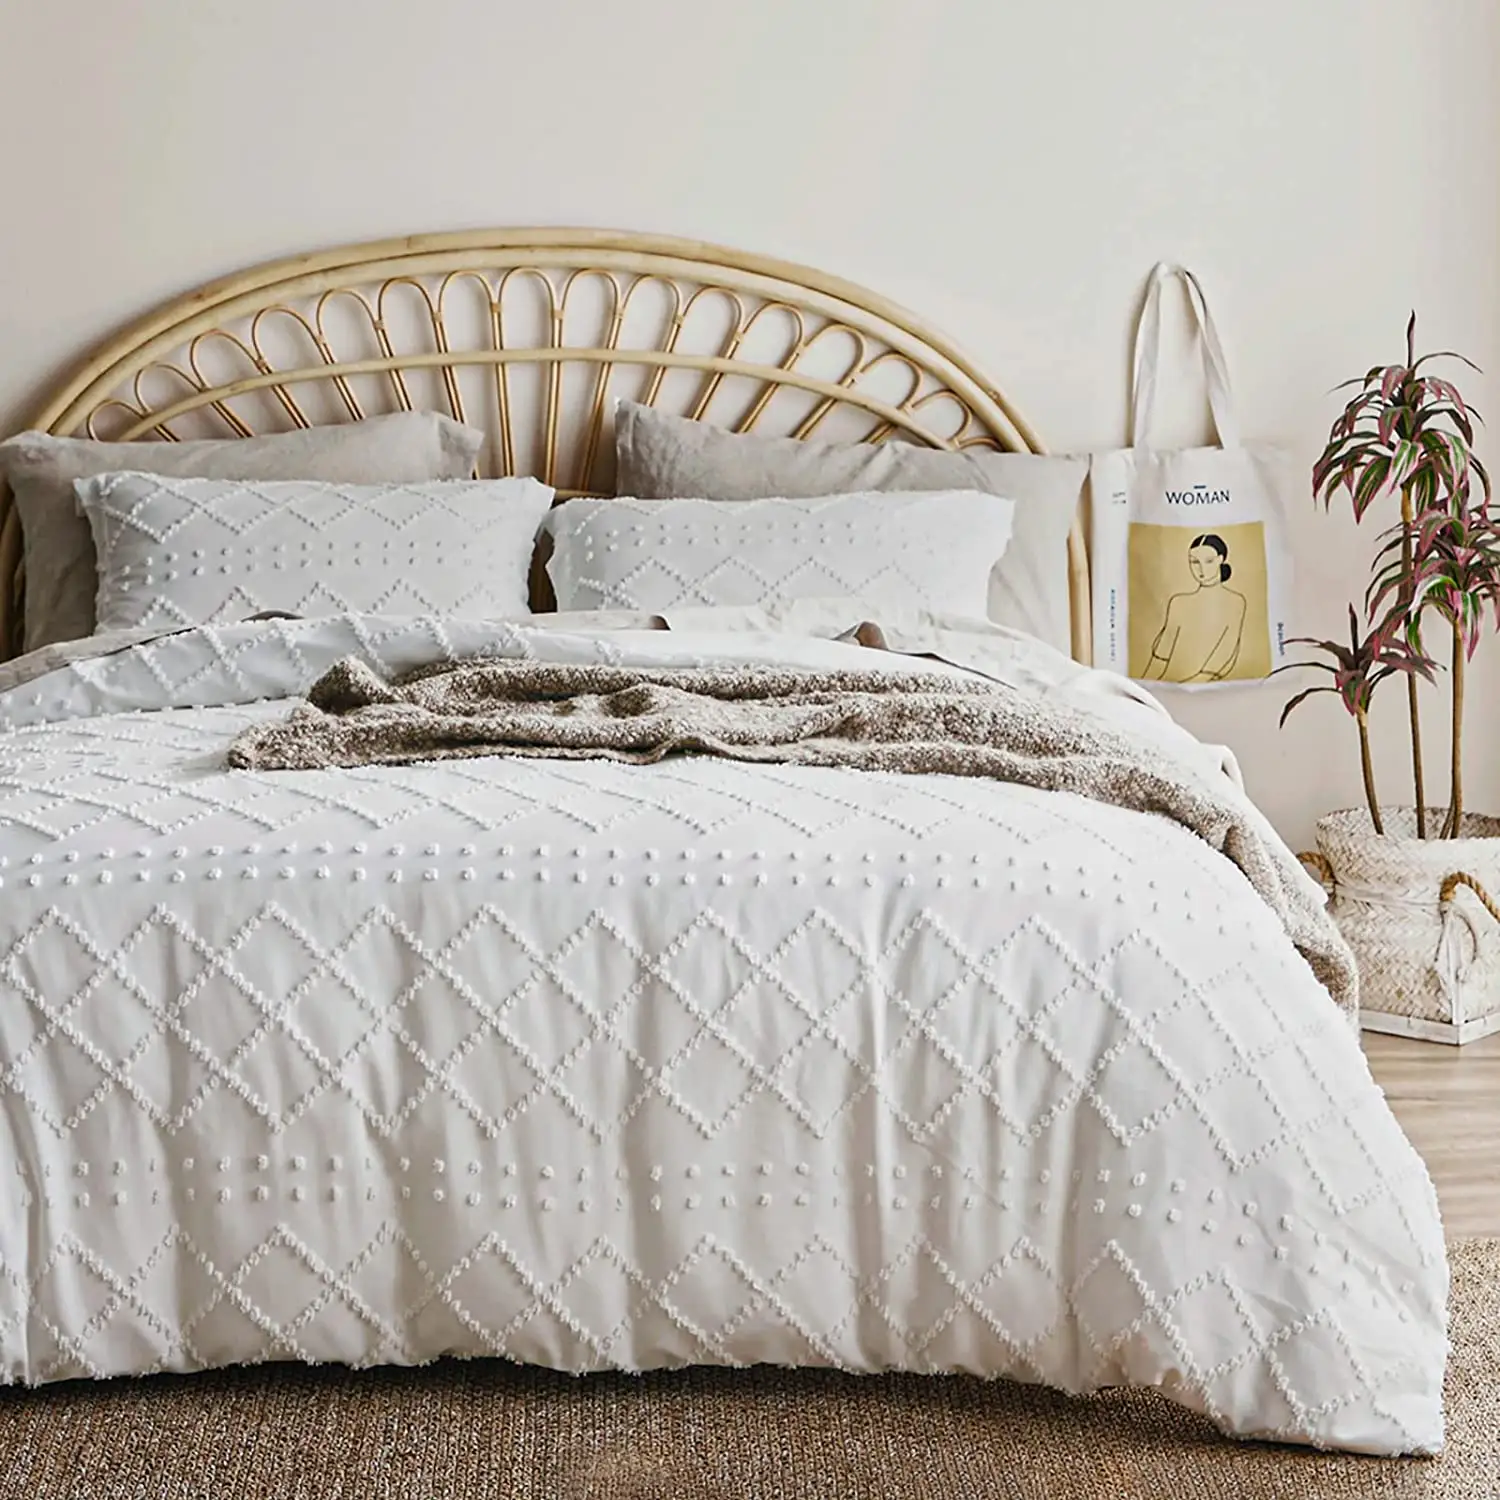 Bulk Bettlaken Bett flach Blatt Mikro faser Schneid motiv Bett bezug Bettlaken Großhandel